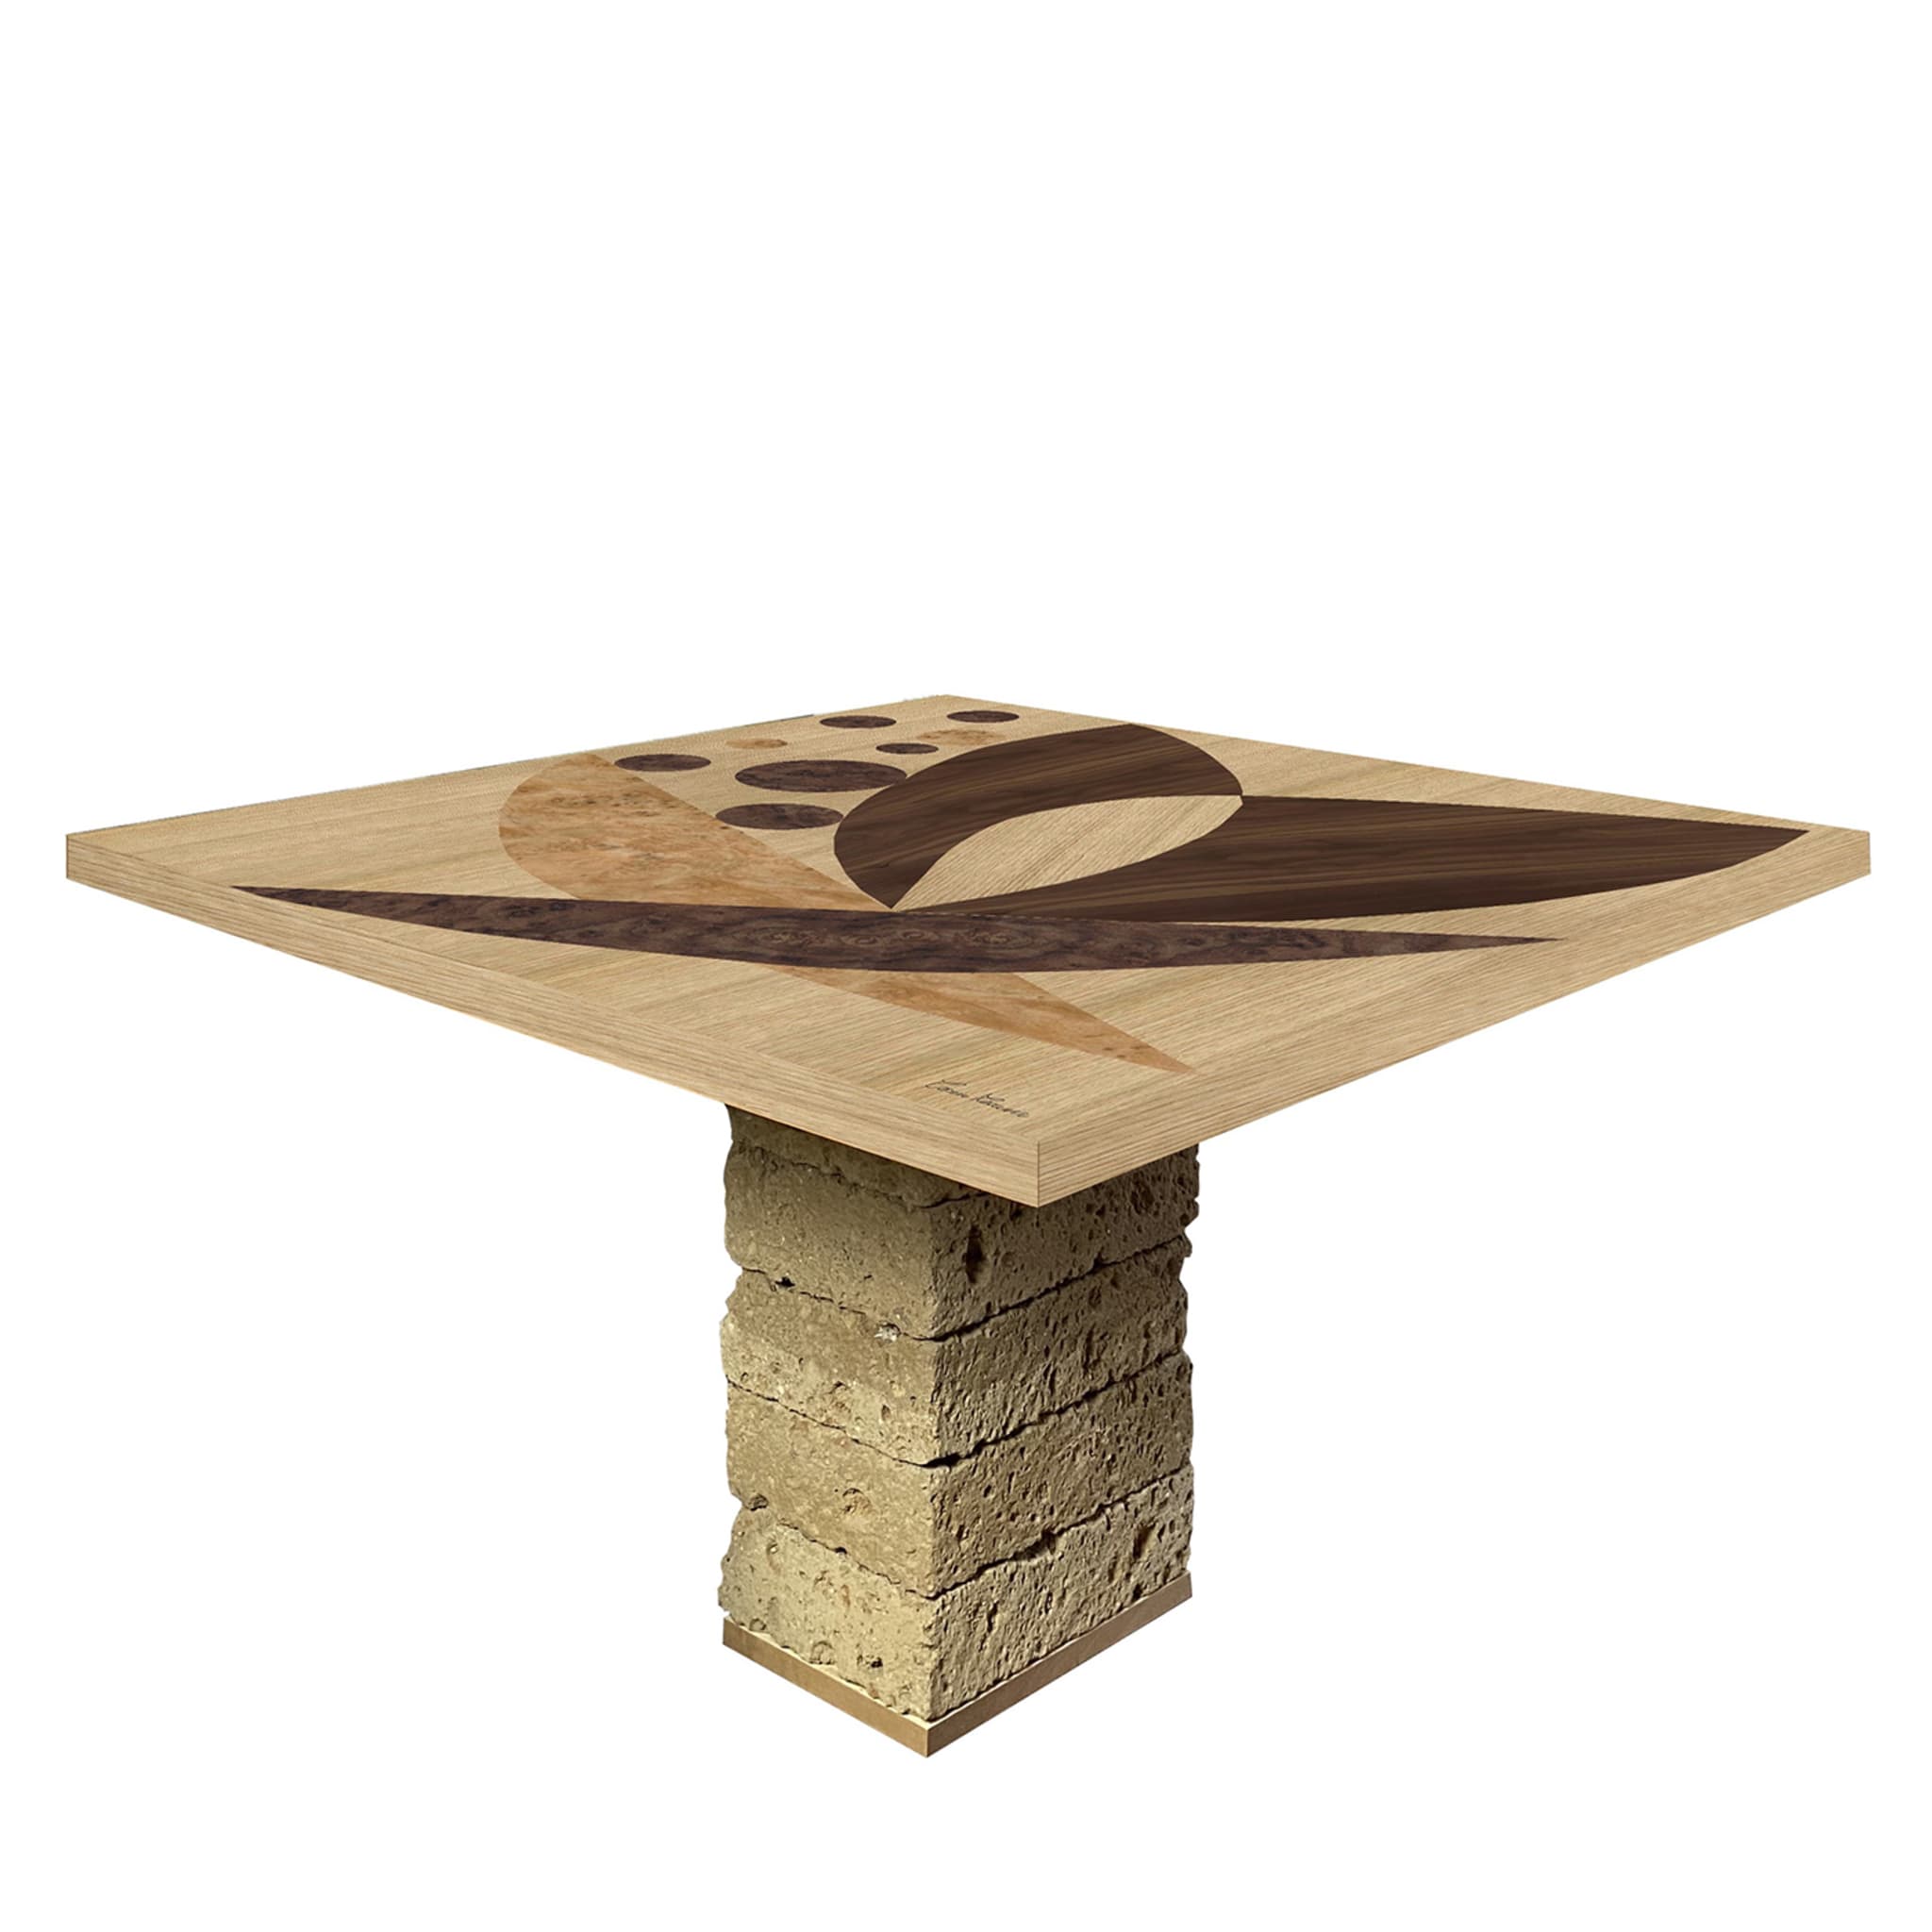 Tarsia Tables Tt8 Square Polychrome Table by Mascia Meccani - Alternative view 2